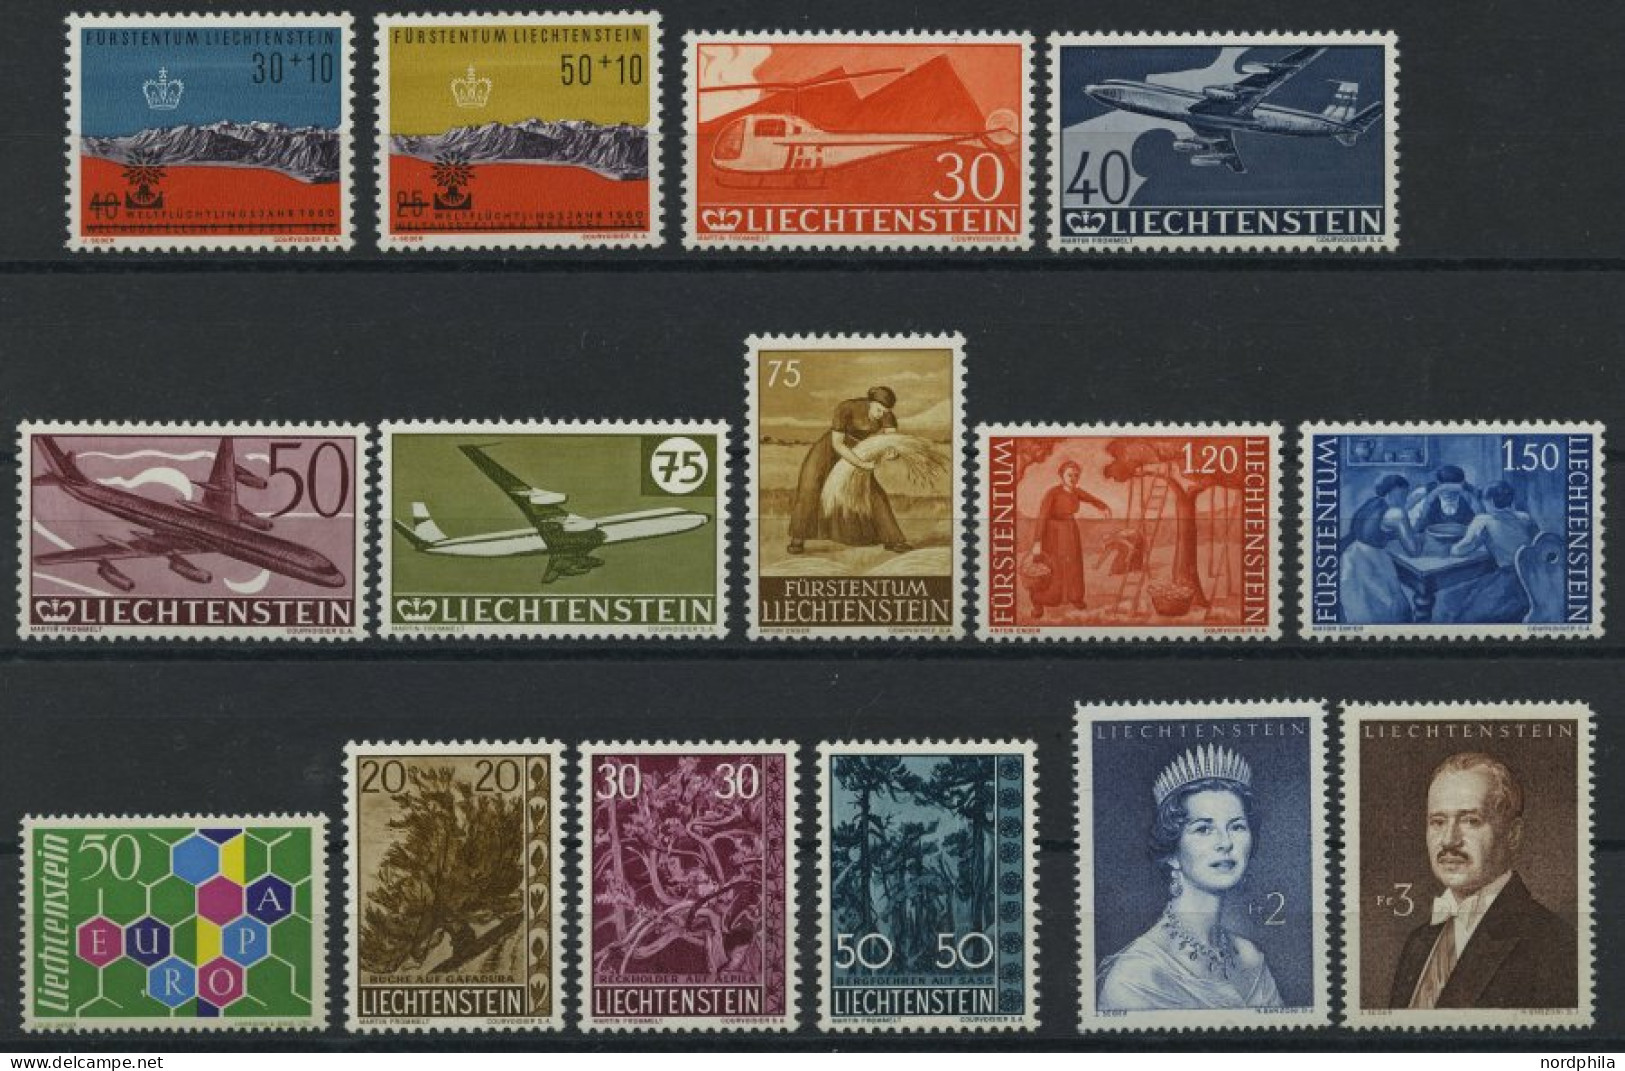 JAHRGÄNGE 389-403 , 1960, Kompletter Postfrischer Jahrgang, Pracht, Mi. 154.70 - Lotes/Colecciones